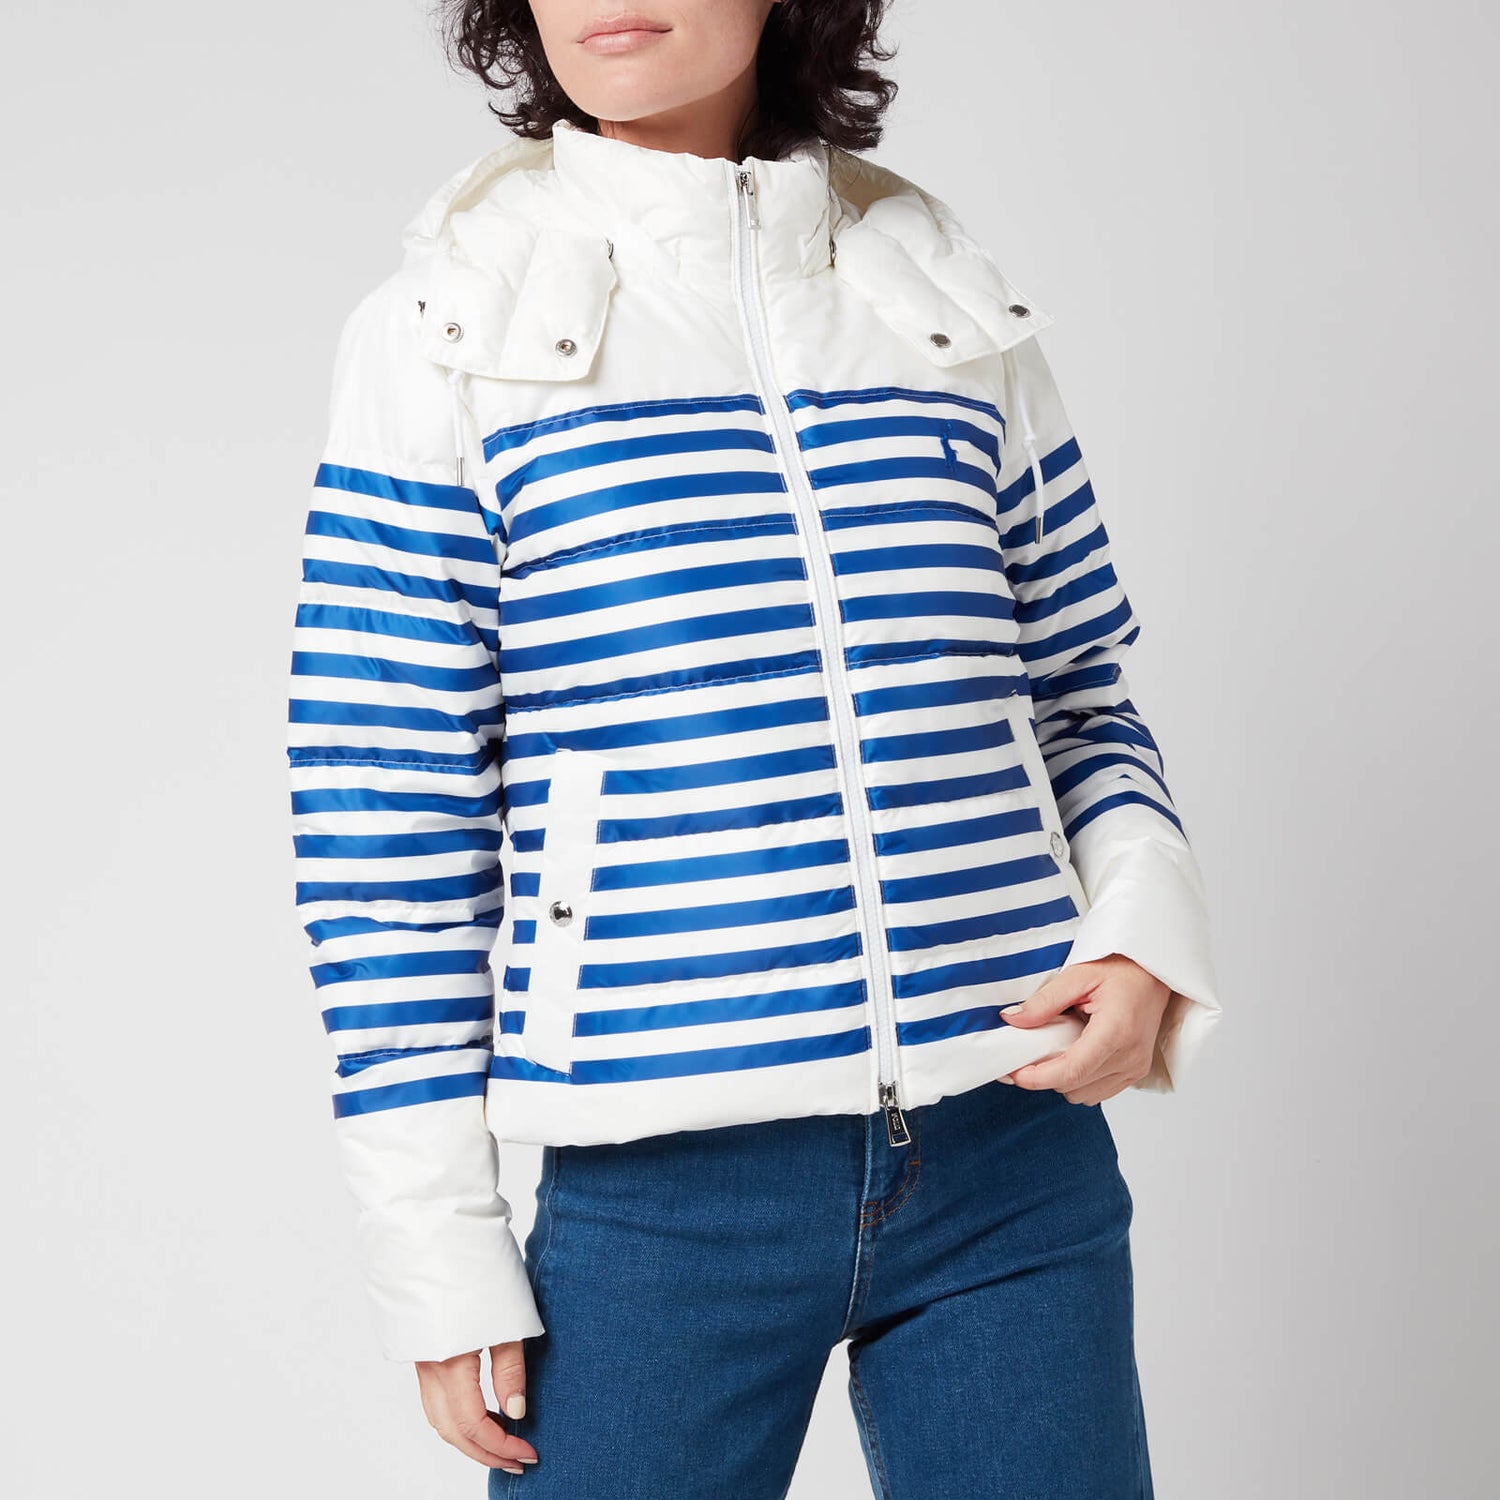 Polo Ralph Lauren Women's Down Fill Jacket - White/Blue Stripe